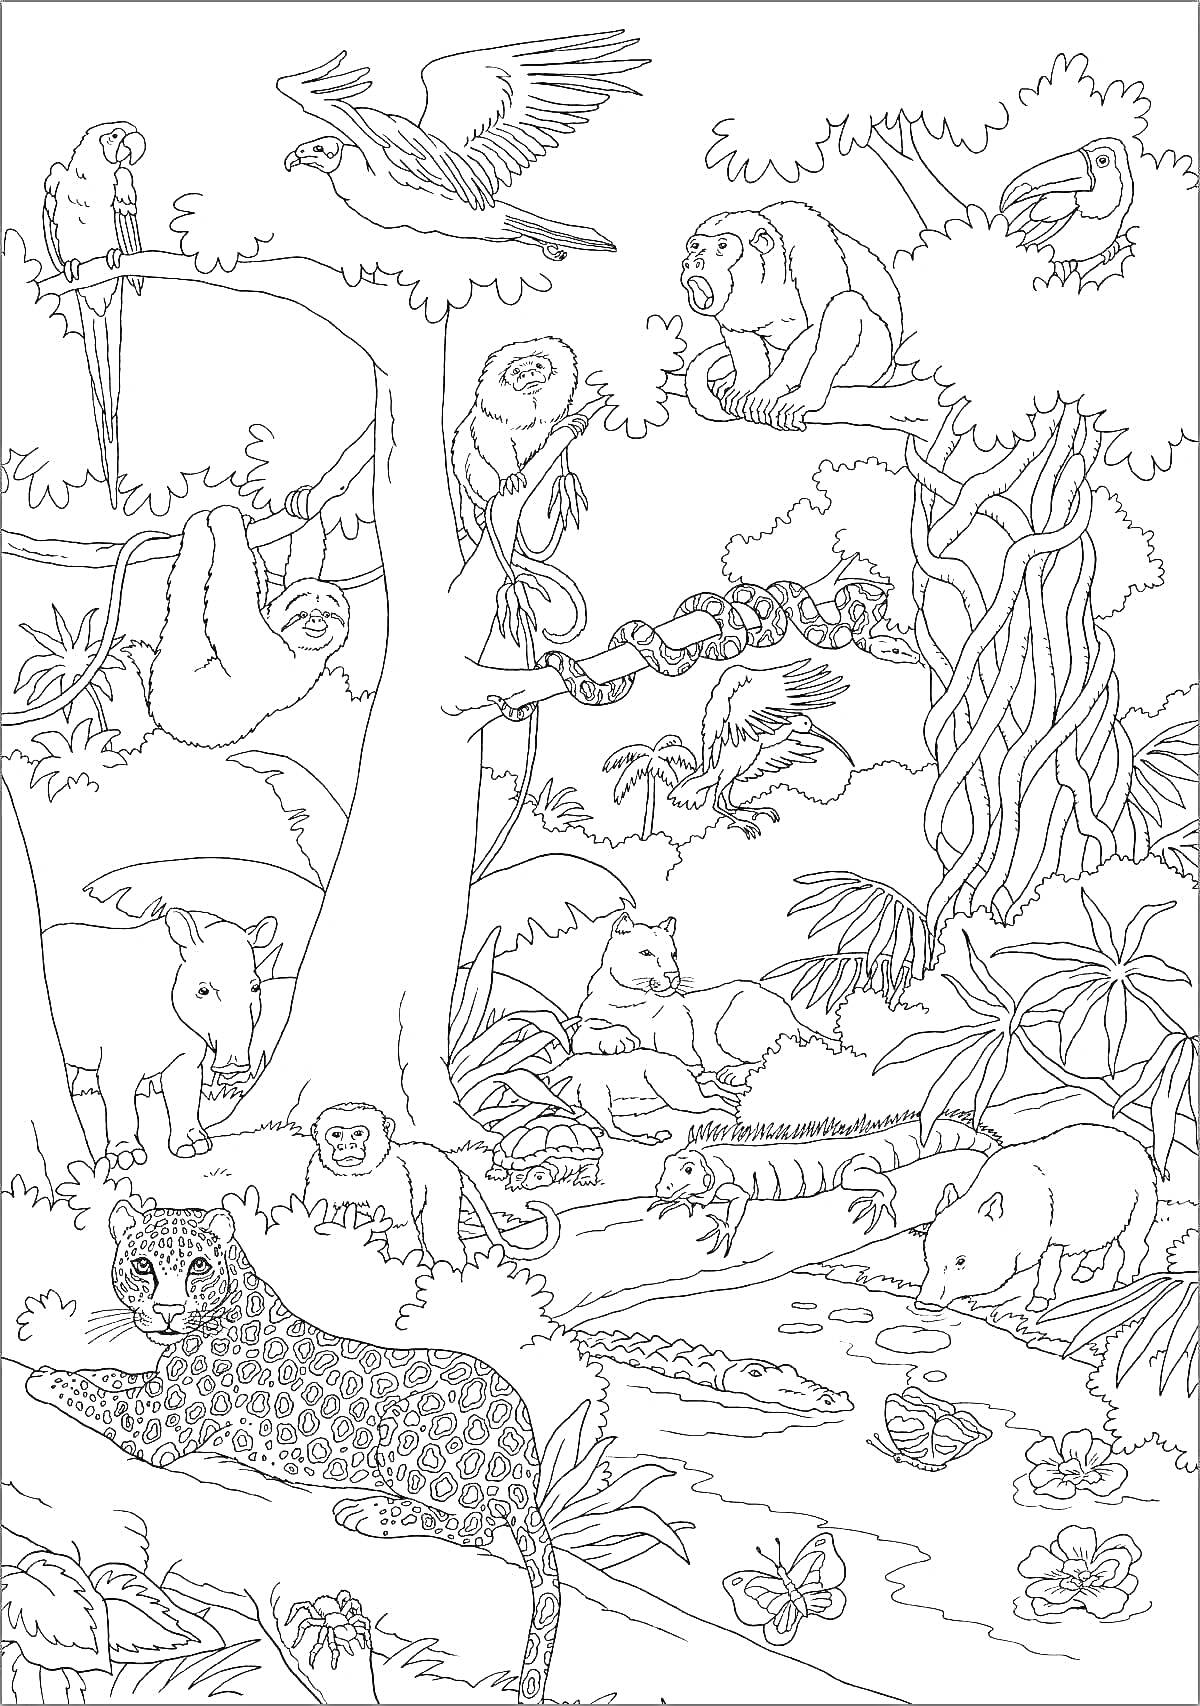 На раскраске изображено: Джунгли, Животные, Леопард, Попугаи, Слон, Тапир, Игуана, Лягушки, Муравьед, Ленивец, Природа, Деревья